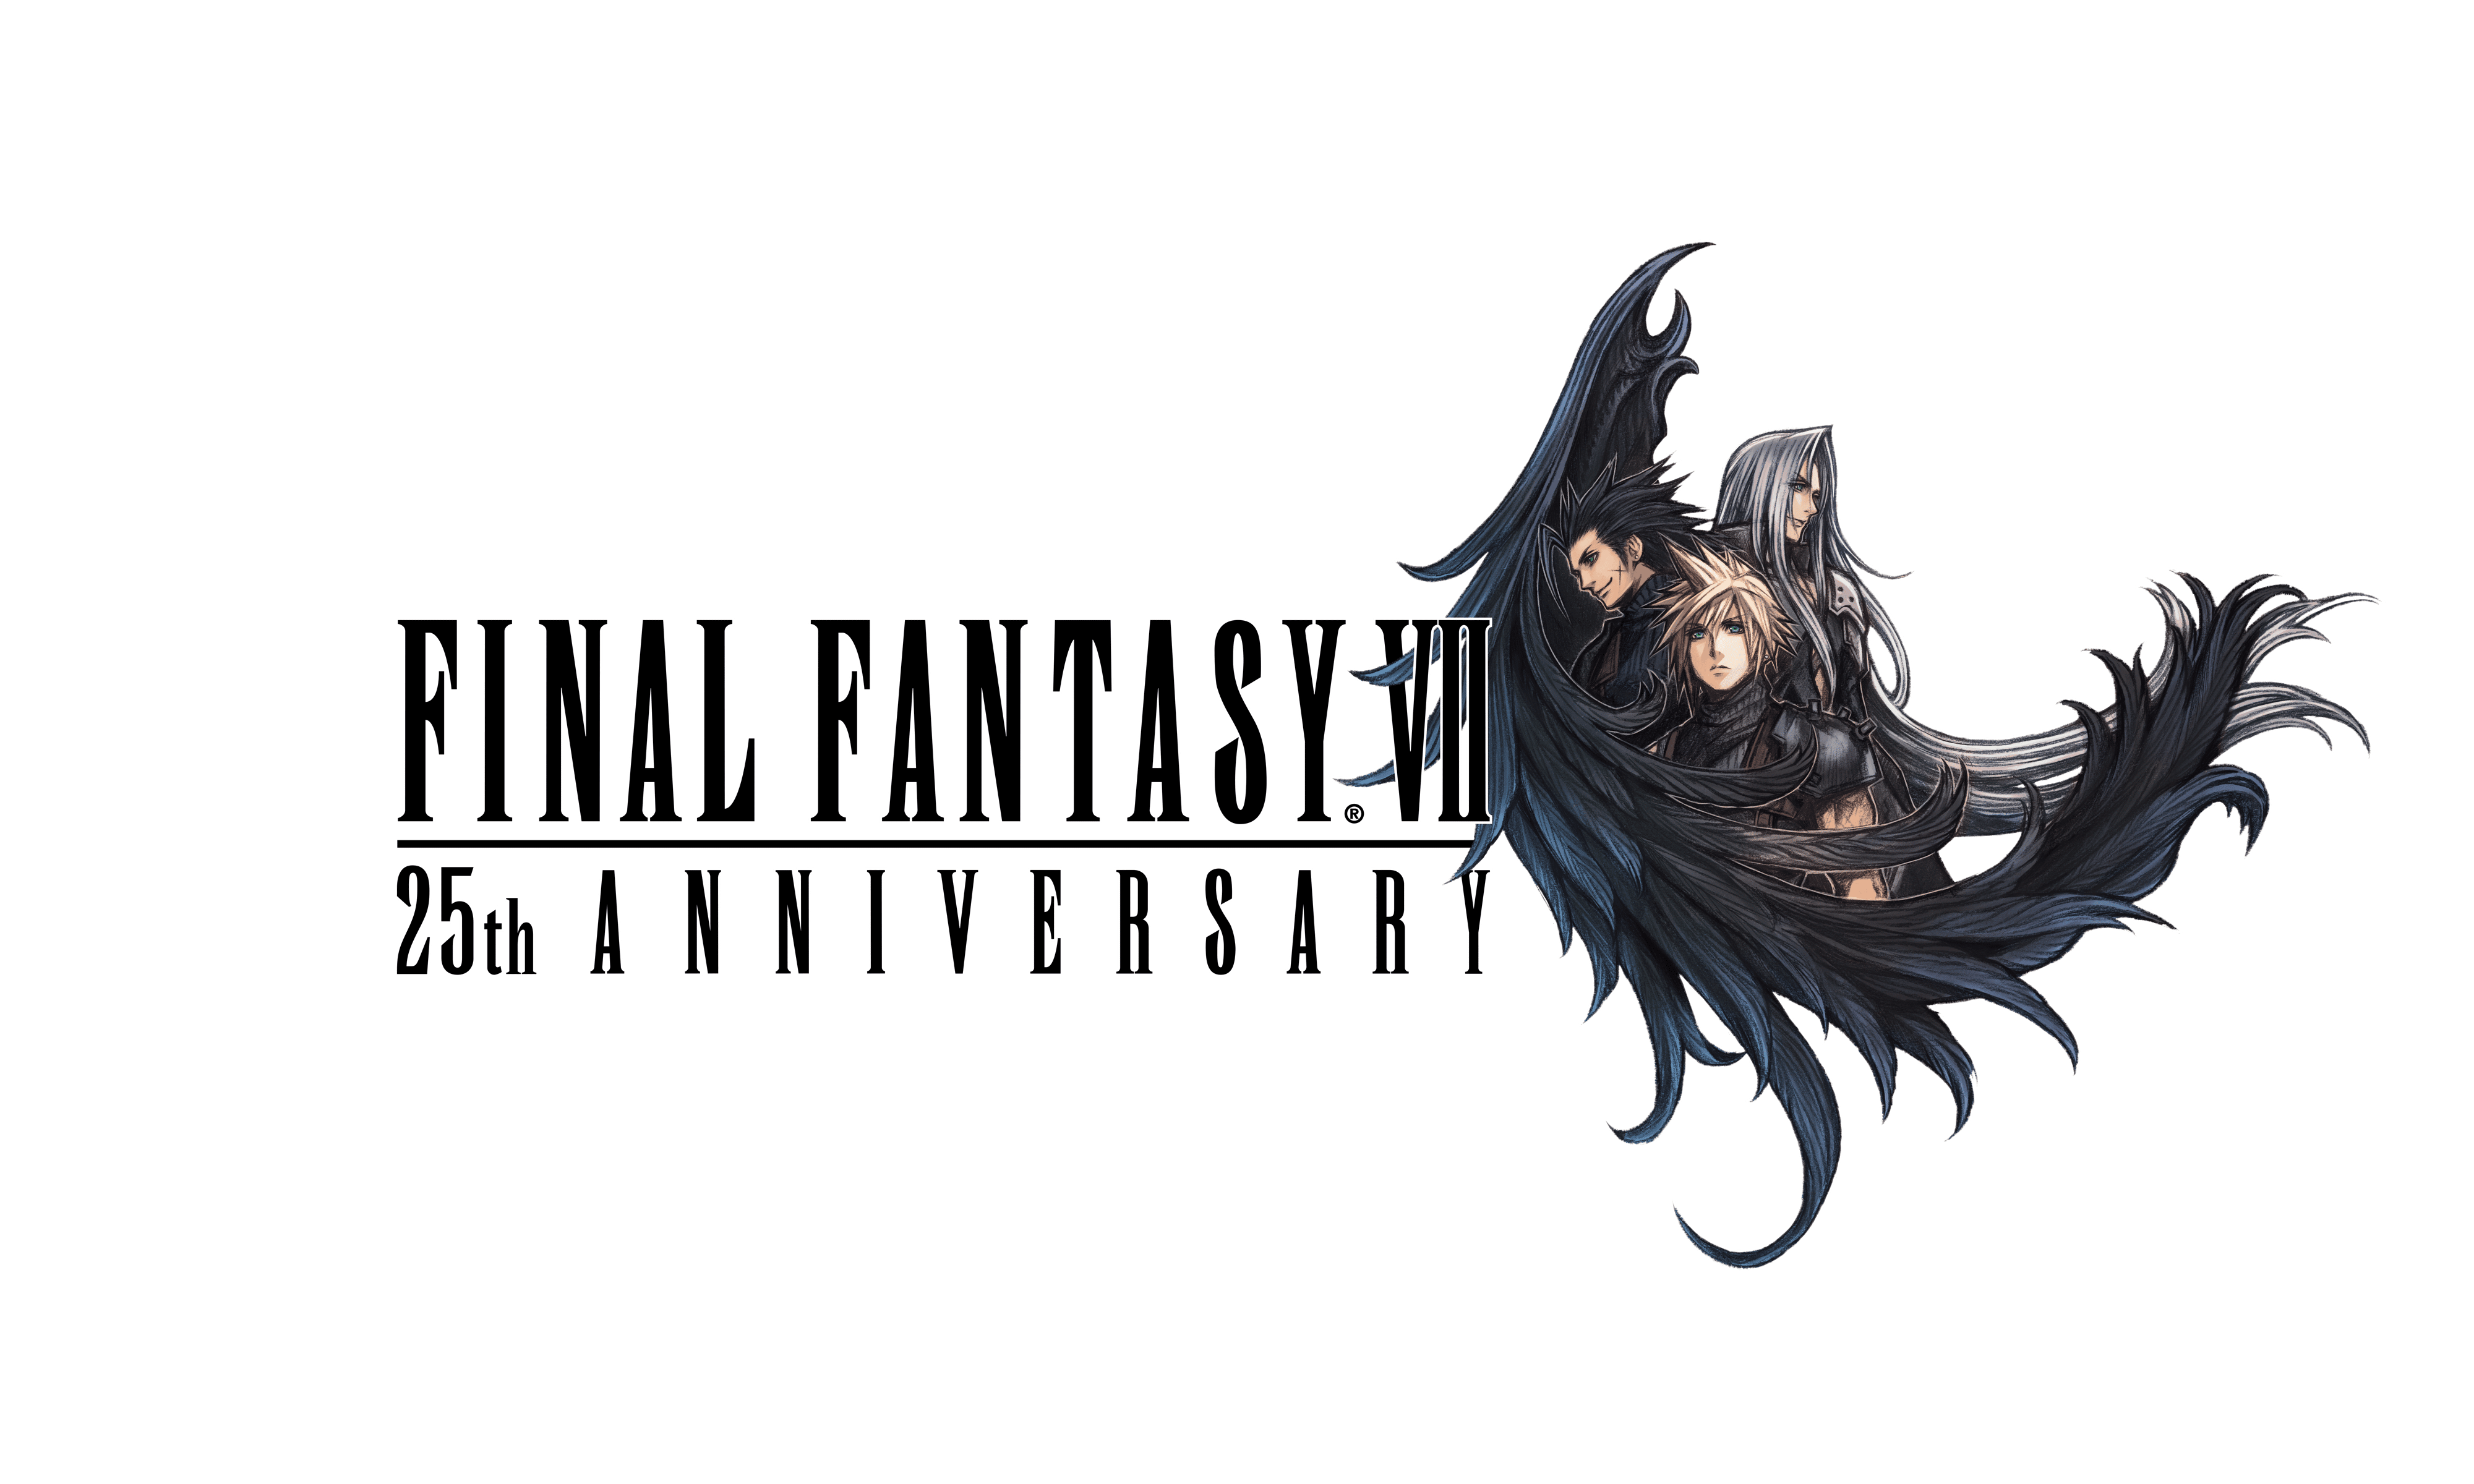 Final Fantasy 7 25th Anniversary